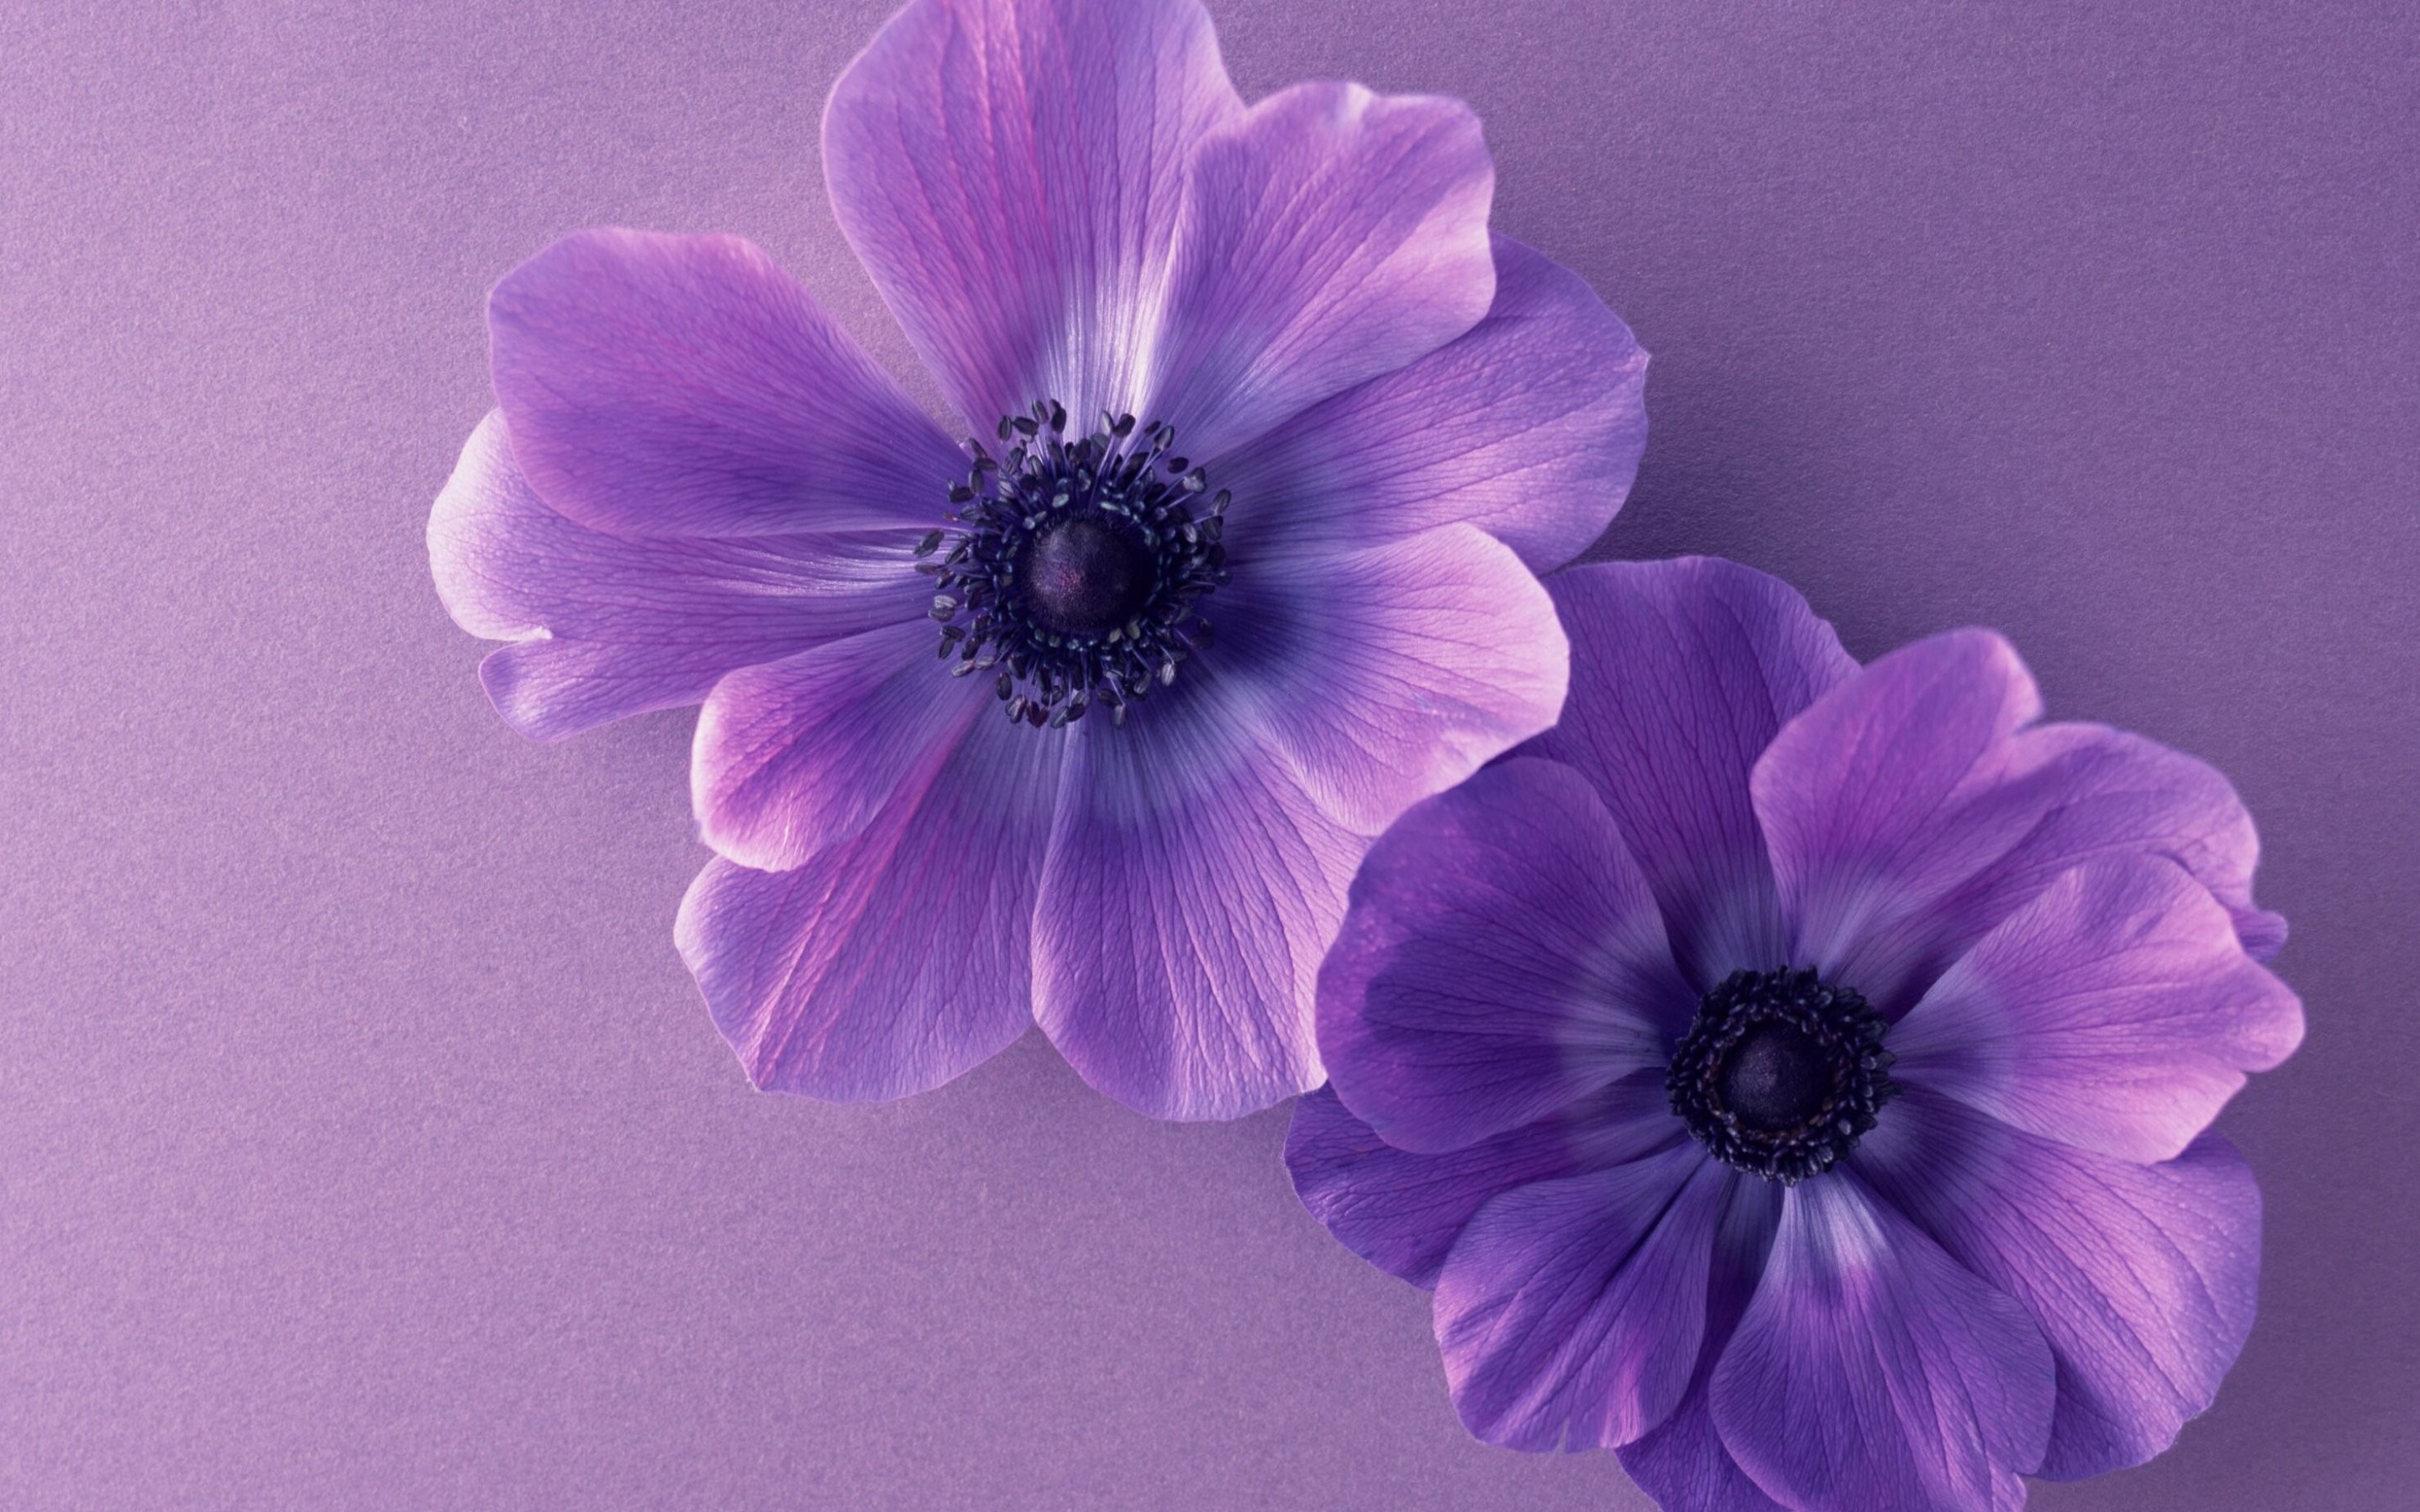 Purple Flower Images Hd 2880x1800 Wallpaper Teahub Io